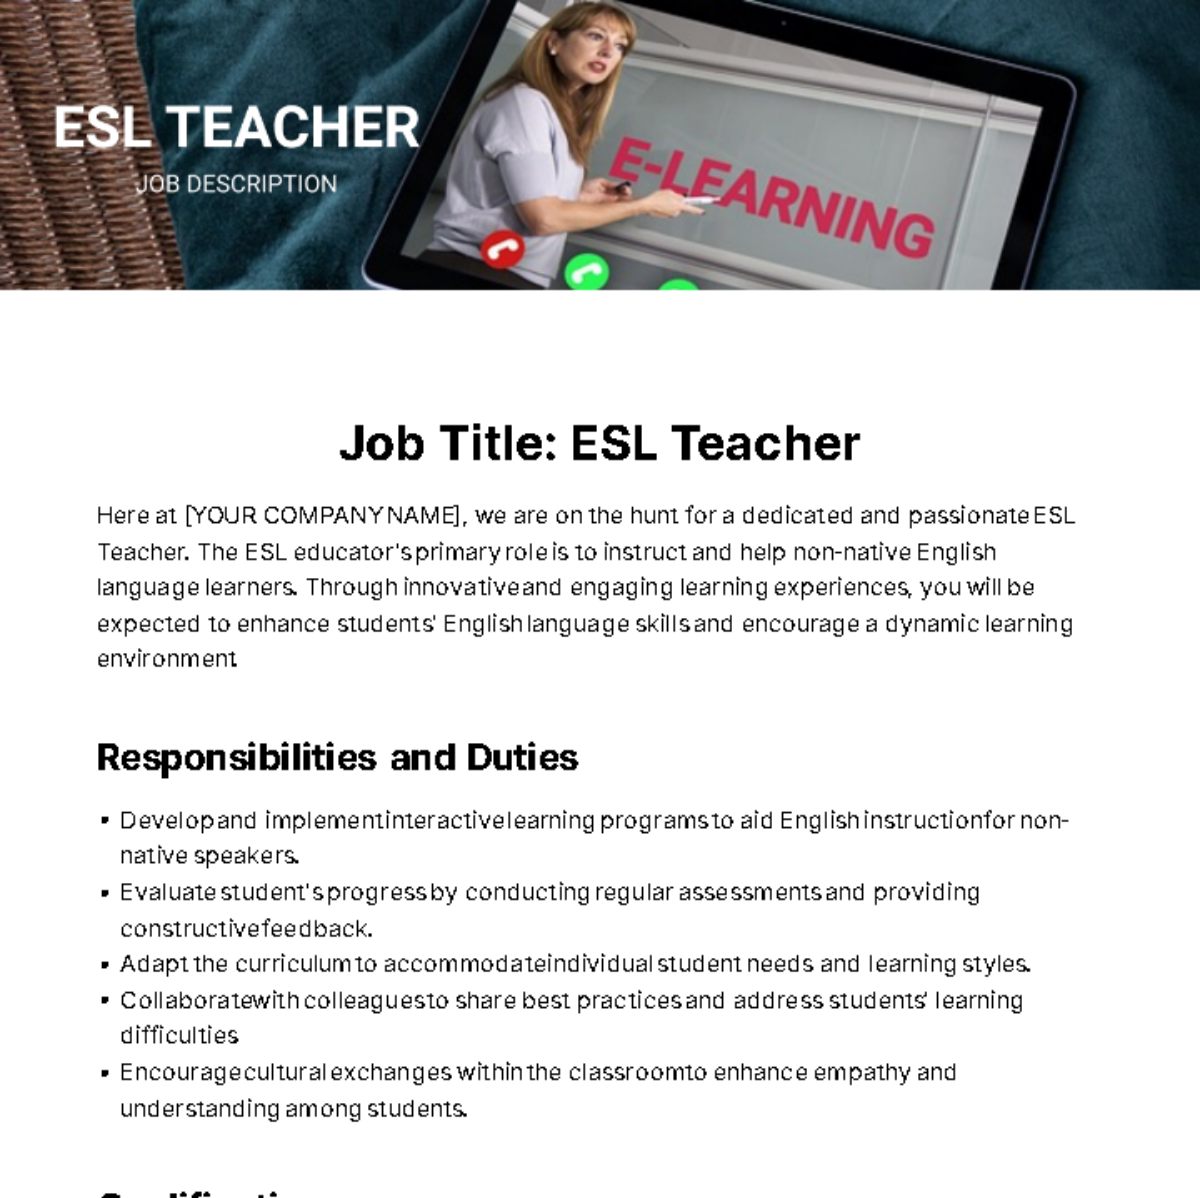 ESL Teacher Job Description Template